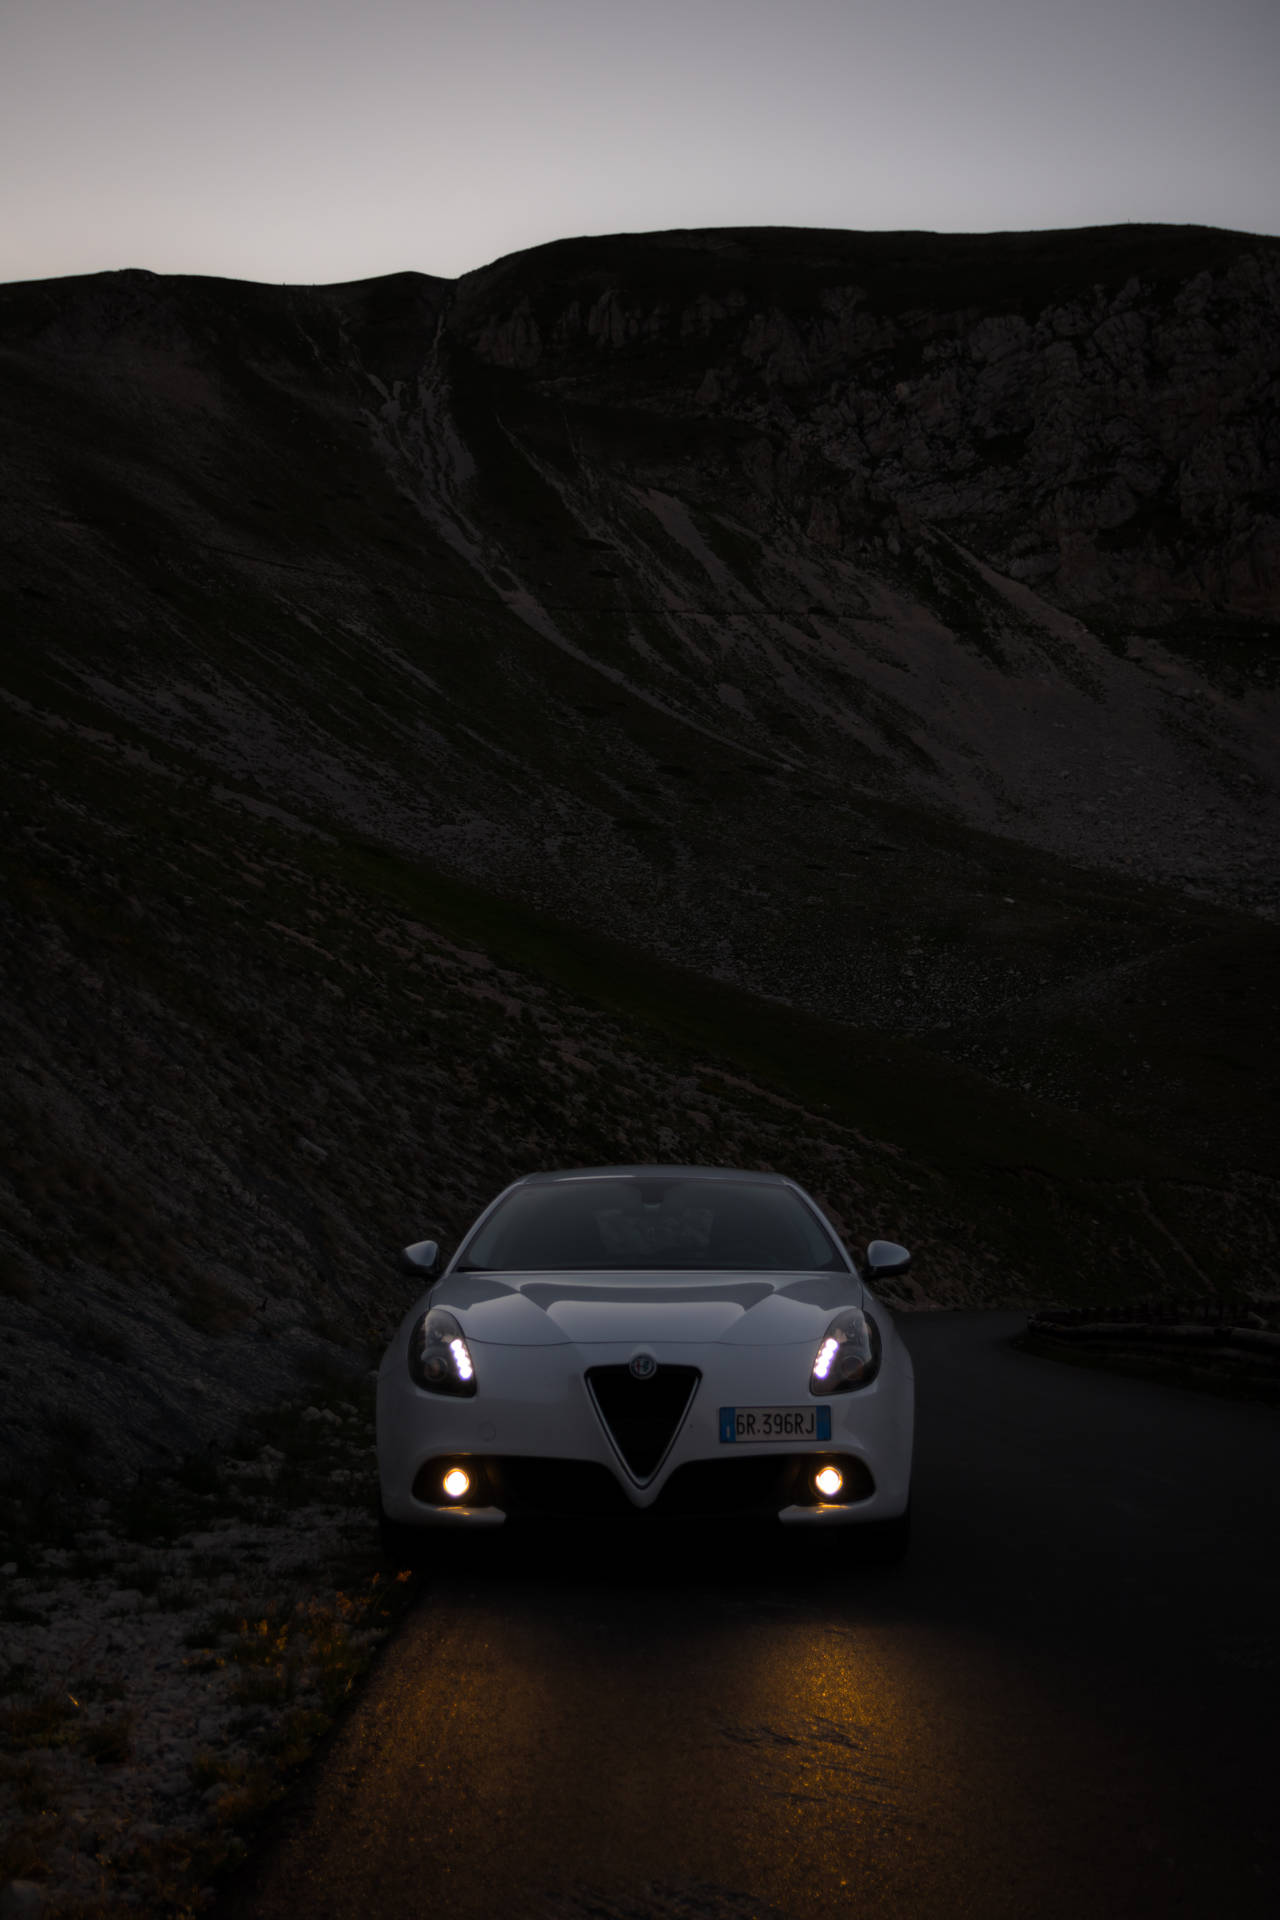 Alfa Romeo Giulietta Illuminated At Night Background